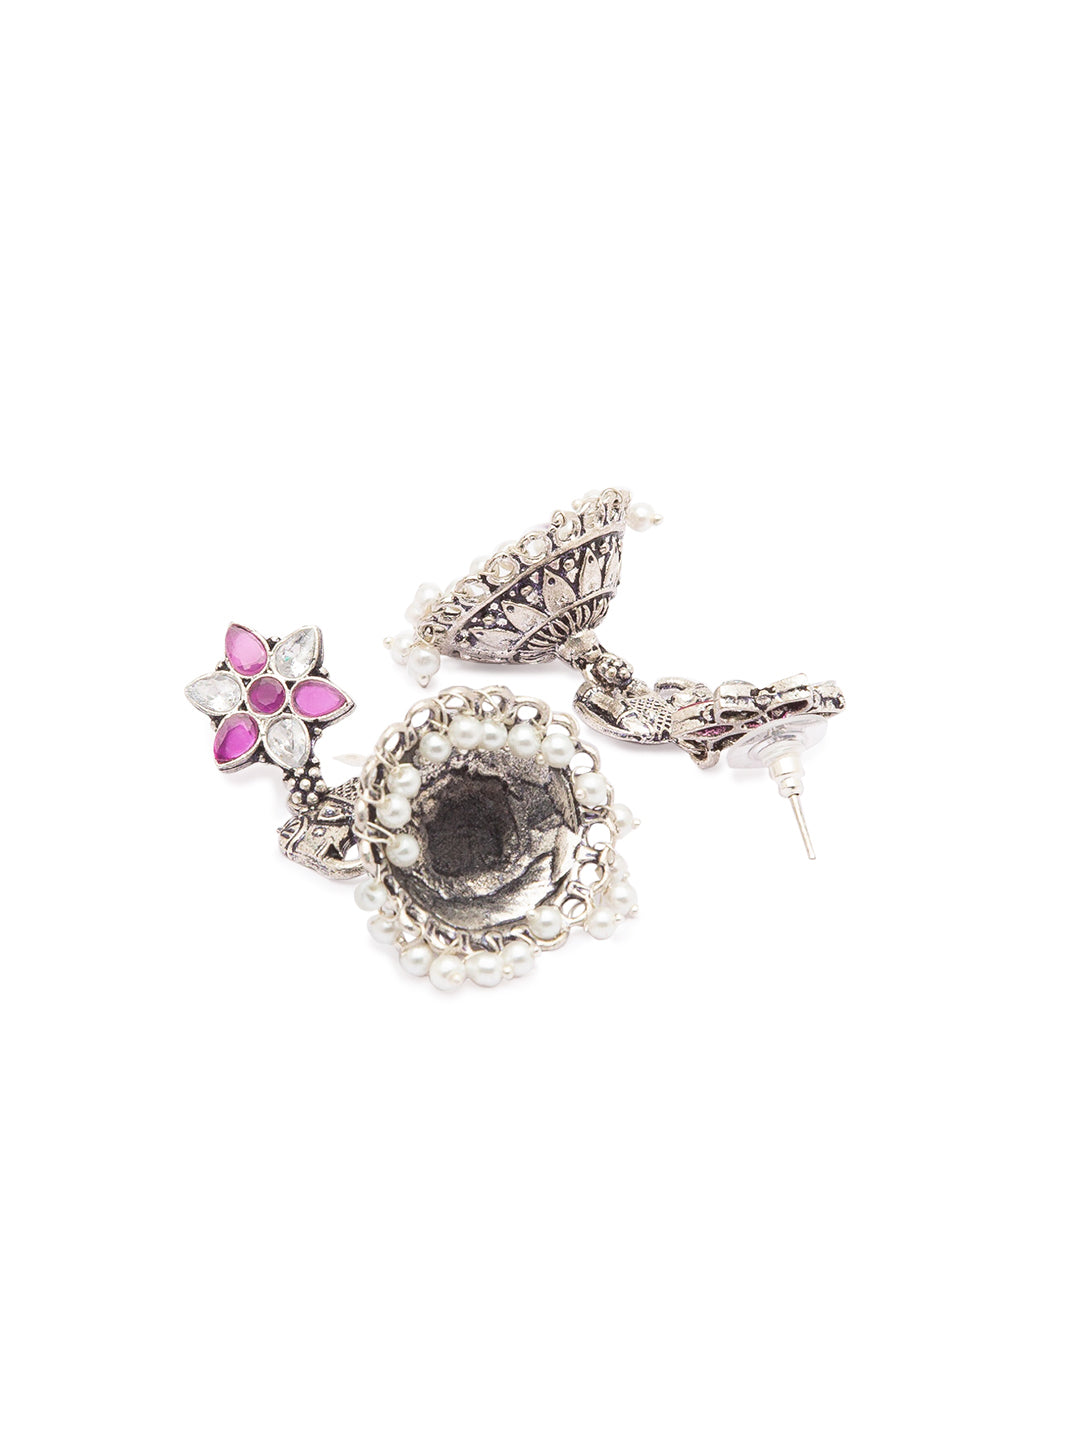 German Oxidized Silver Earrings Flower/Elephant Engraved Design Stones Studded Dangler Pearl Jhumka